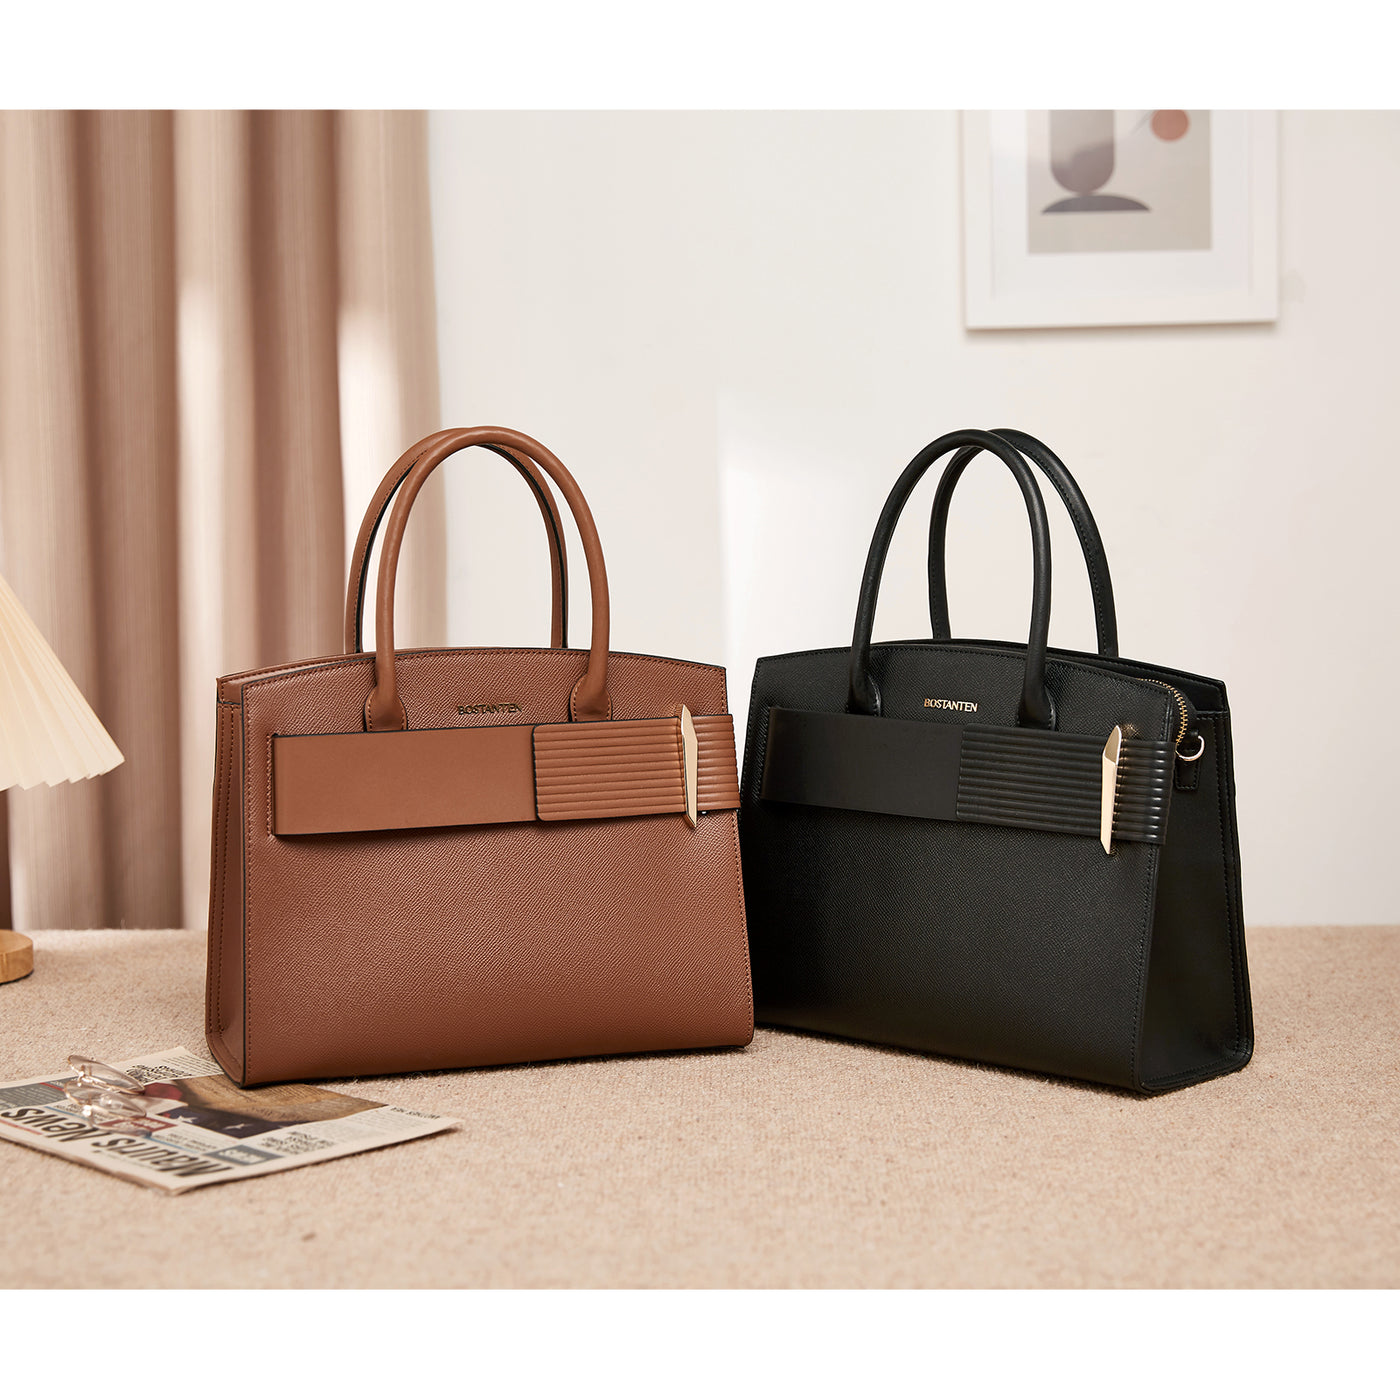 Tote Bag for Women Handbags Purse for Work Shopping Stylish Designer  Leather Shoulder Bag with Adjustable Handle